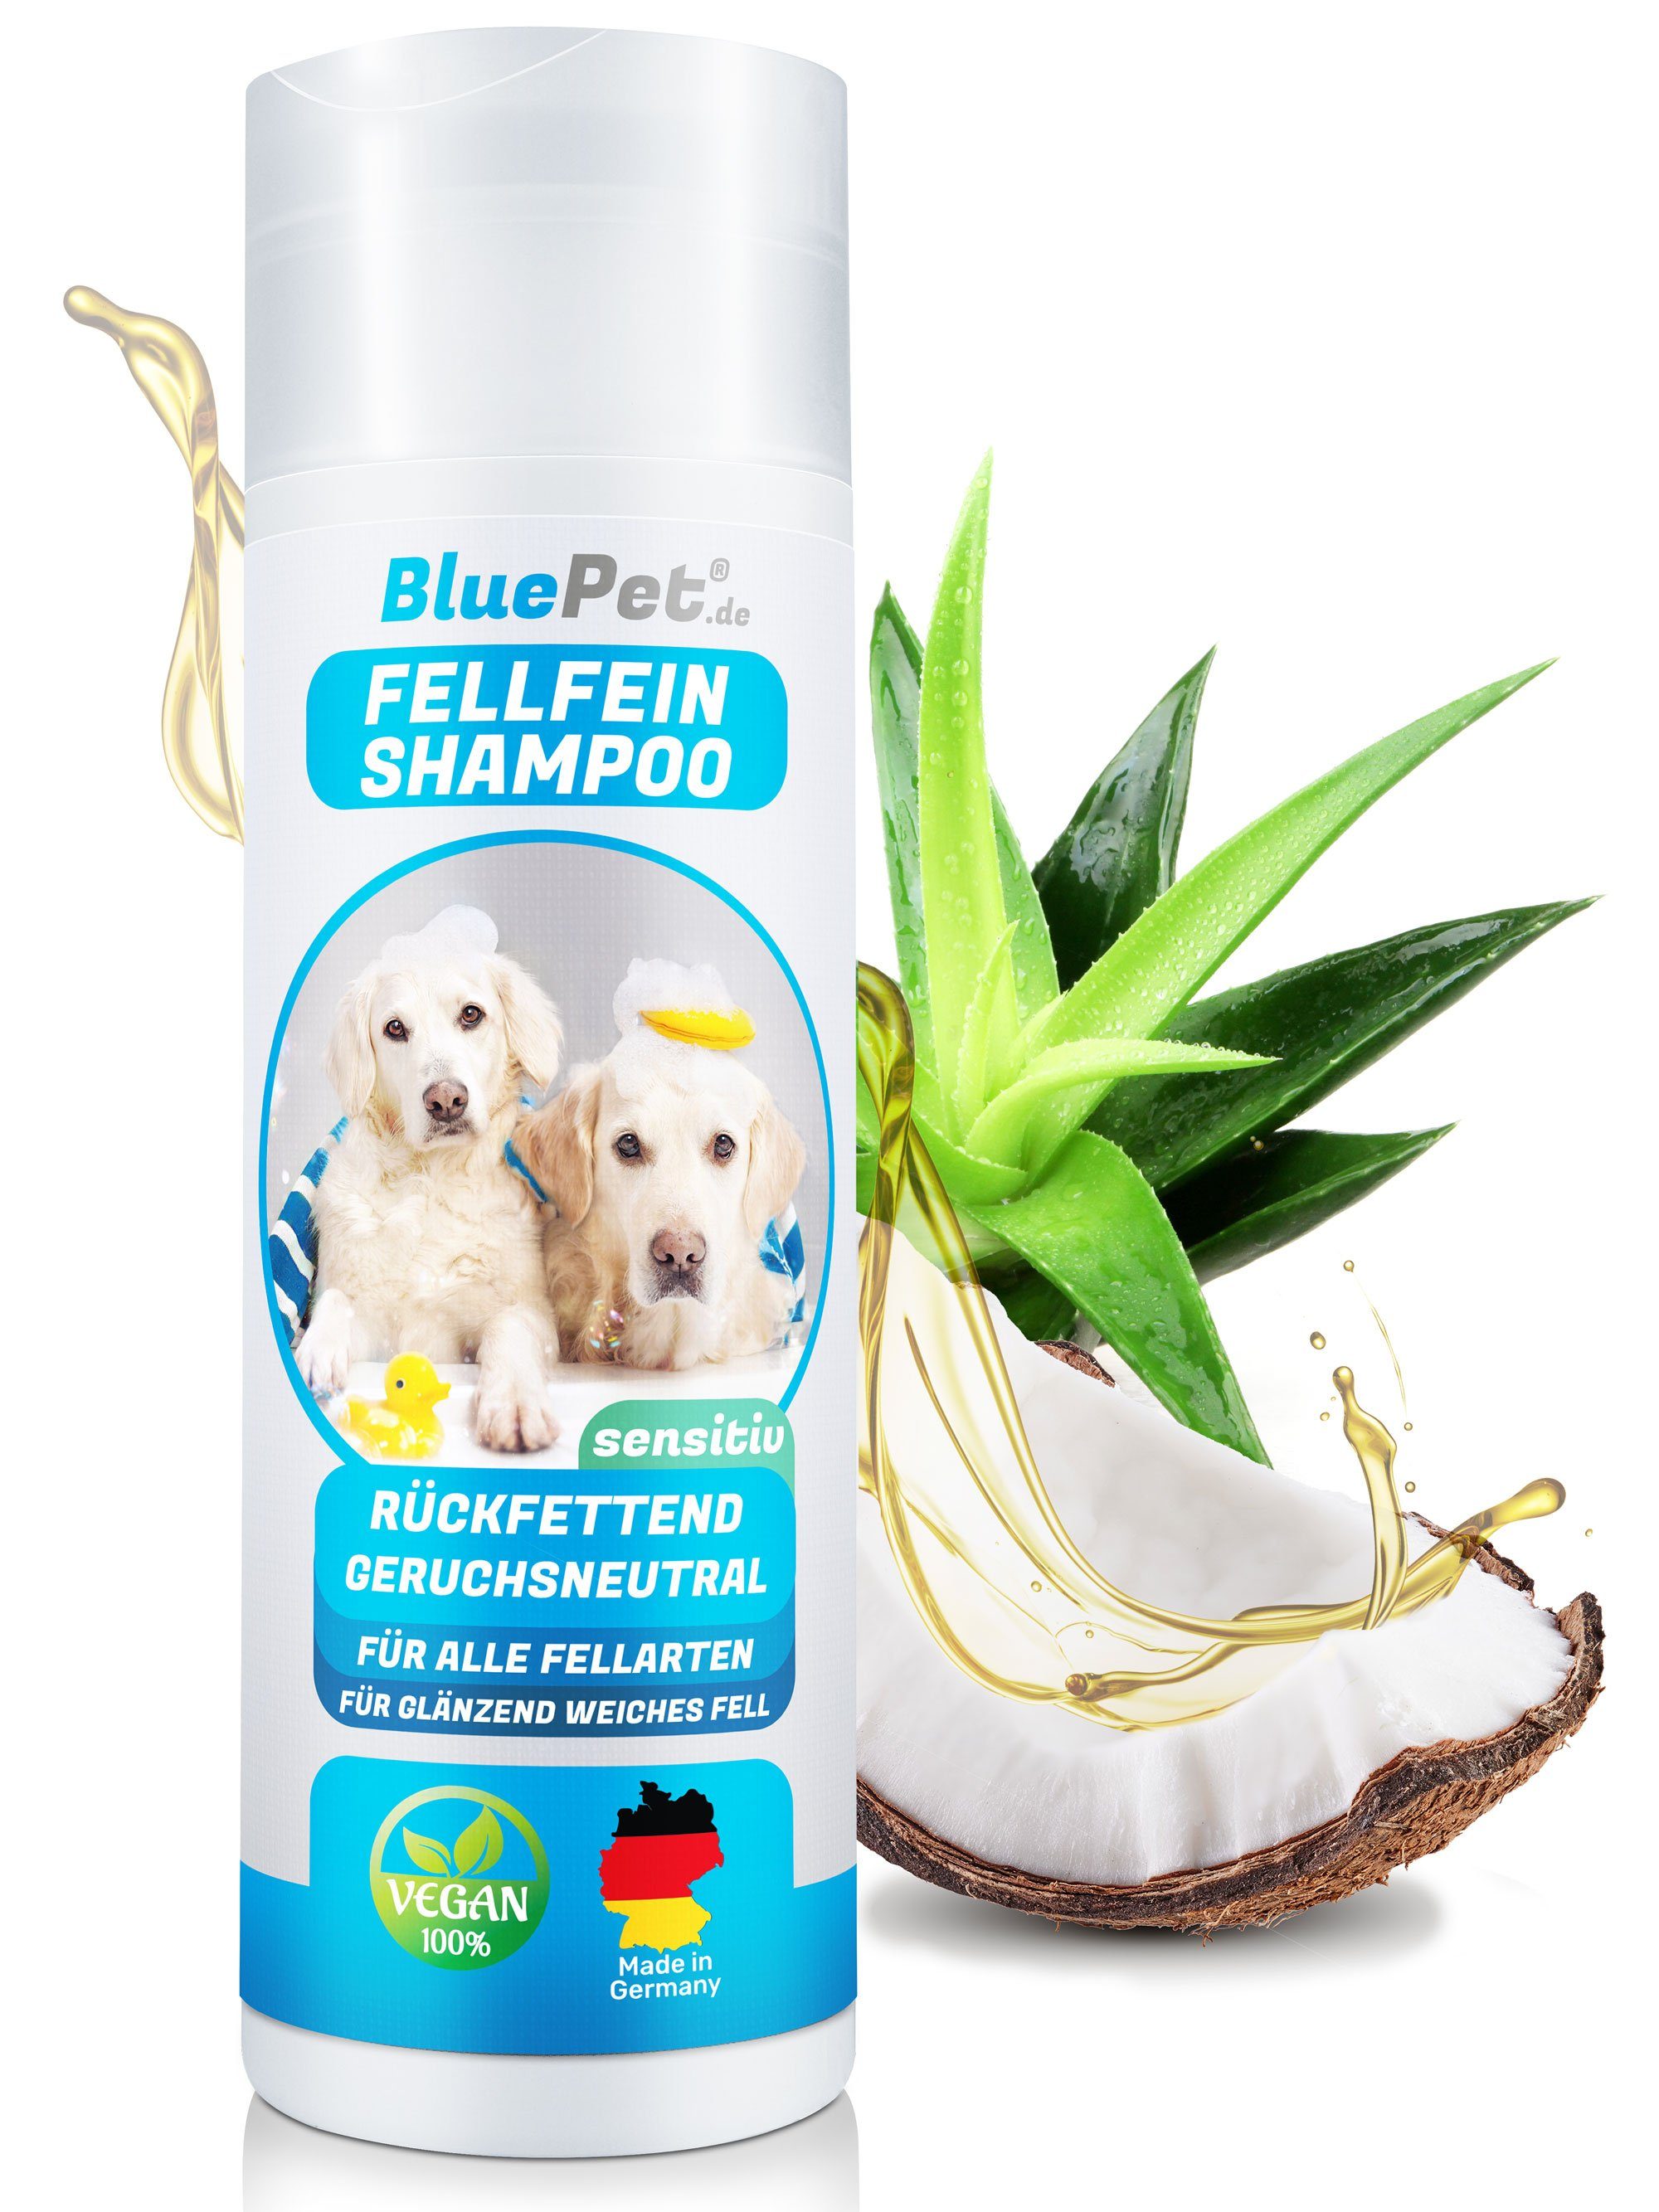 BluePet Tiershampoo "FellFein" Hundeshampoo Sensitiv, 200 ml, 100% vegan,  Made in Germany, ohne Duftstoffe/Silikone/Farbstoffe